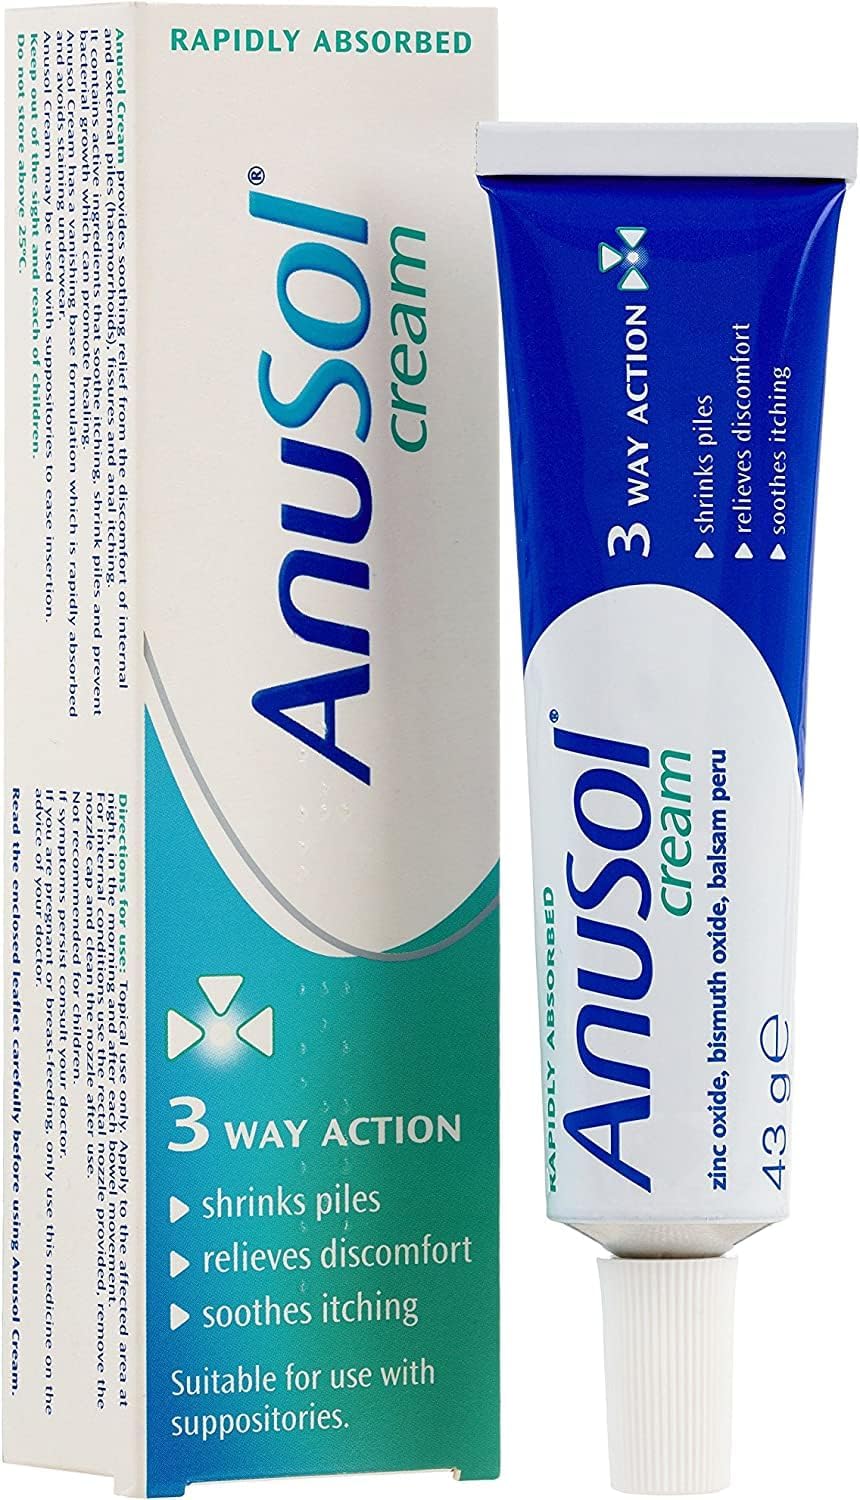 Anusol Cream for Haemorrhoids Treatment 43g RRP 5.60 CLEARANCE XL 4.99